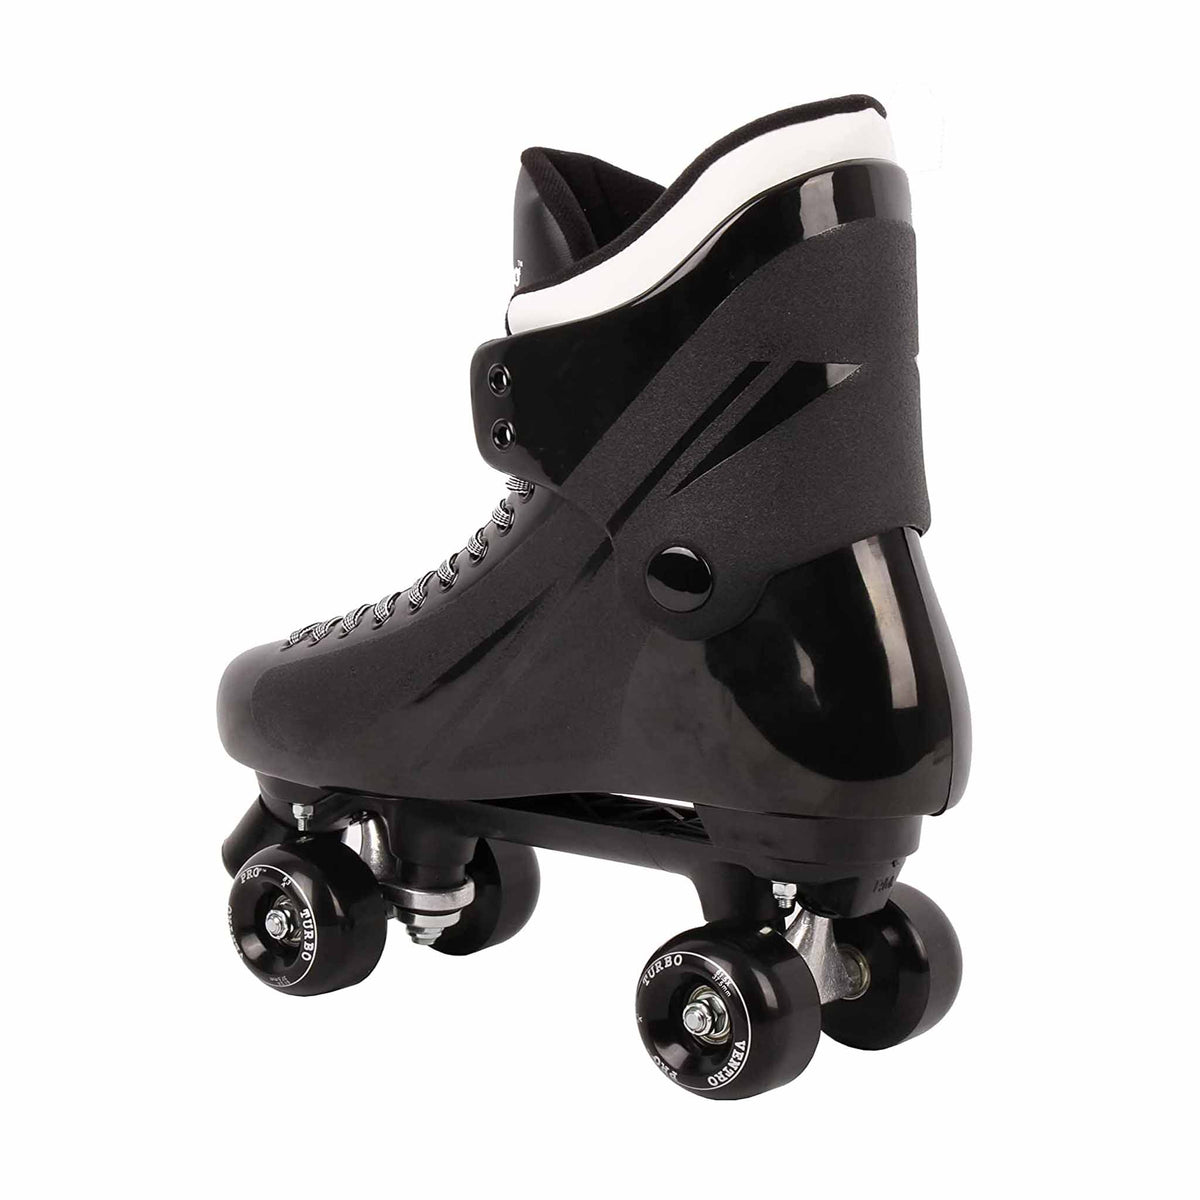 Ventro Pro Turbo Quad Roller Skates - Roller Skates | JT Skate